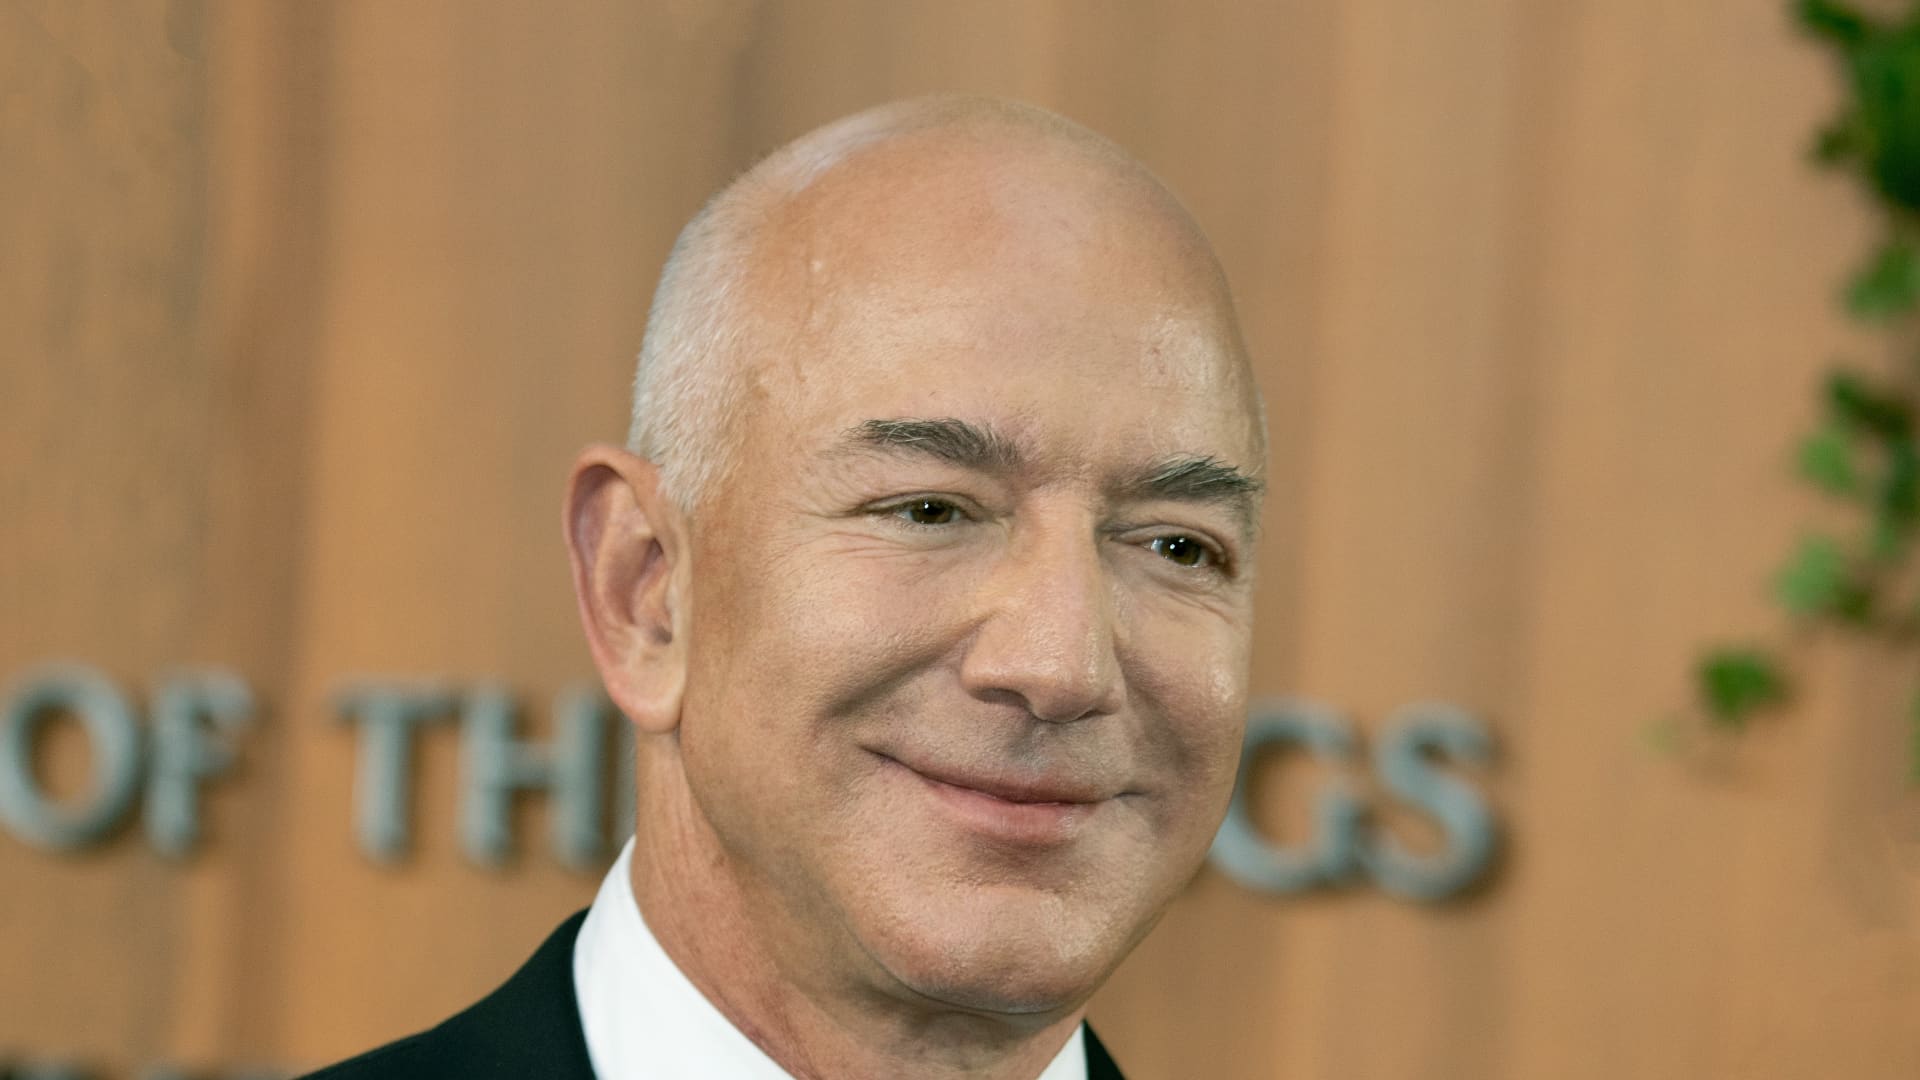 Jeff Bezos unloads around $2.4 billion in Amazon inventory, bringing most stylish sales to 50 million shares